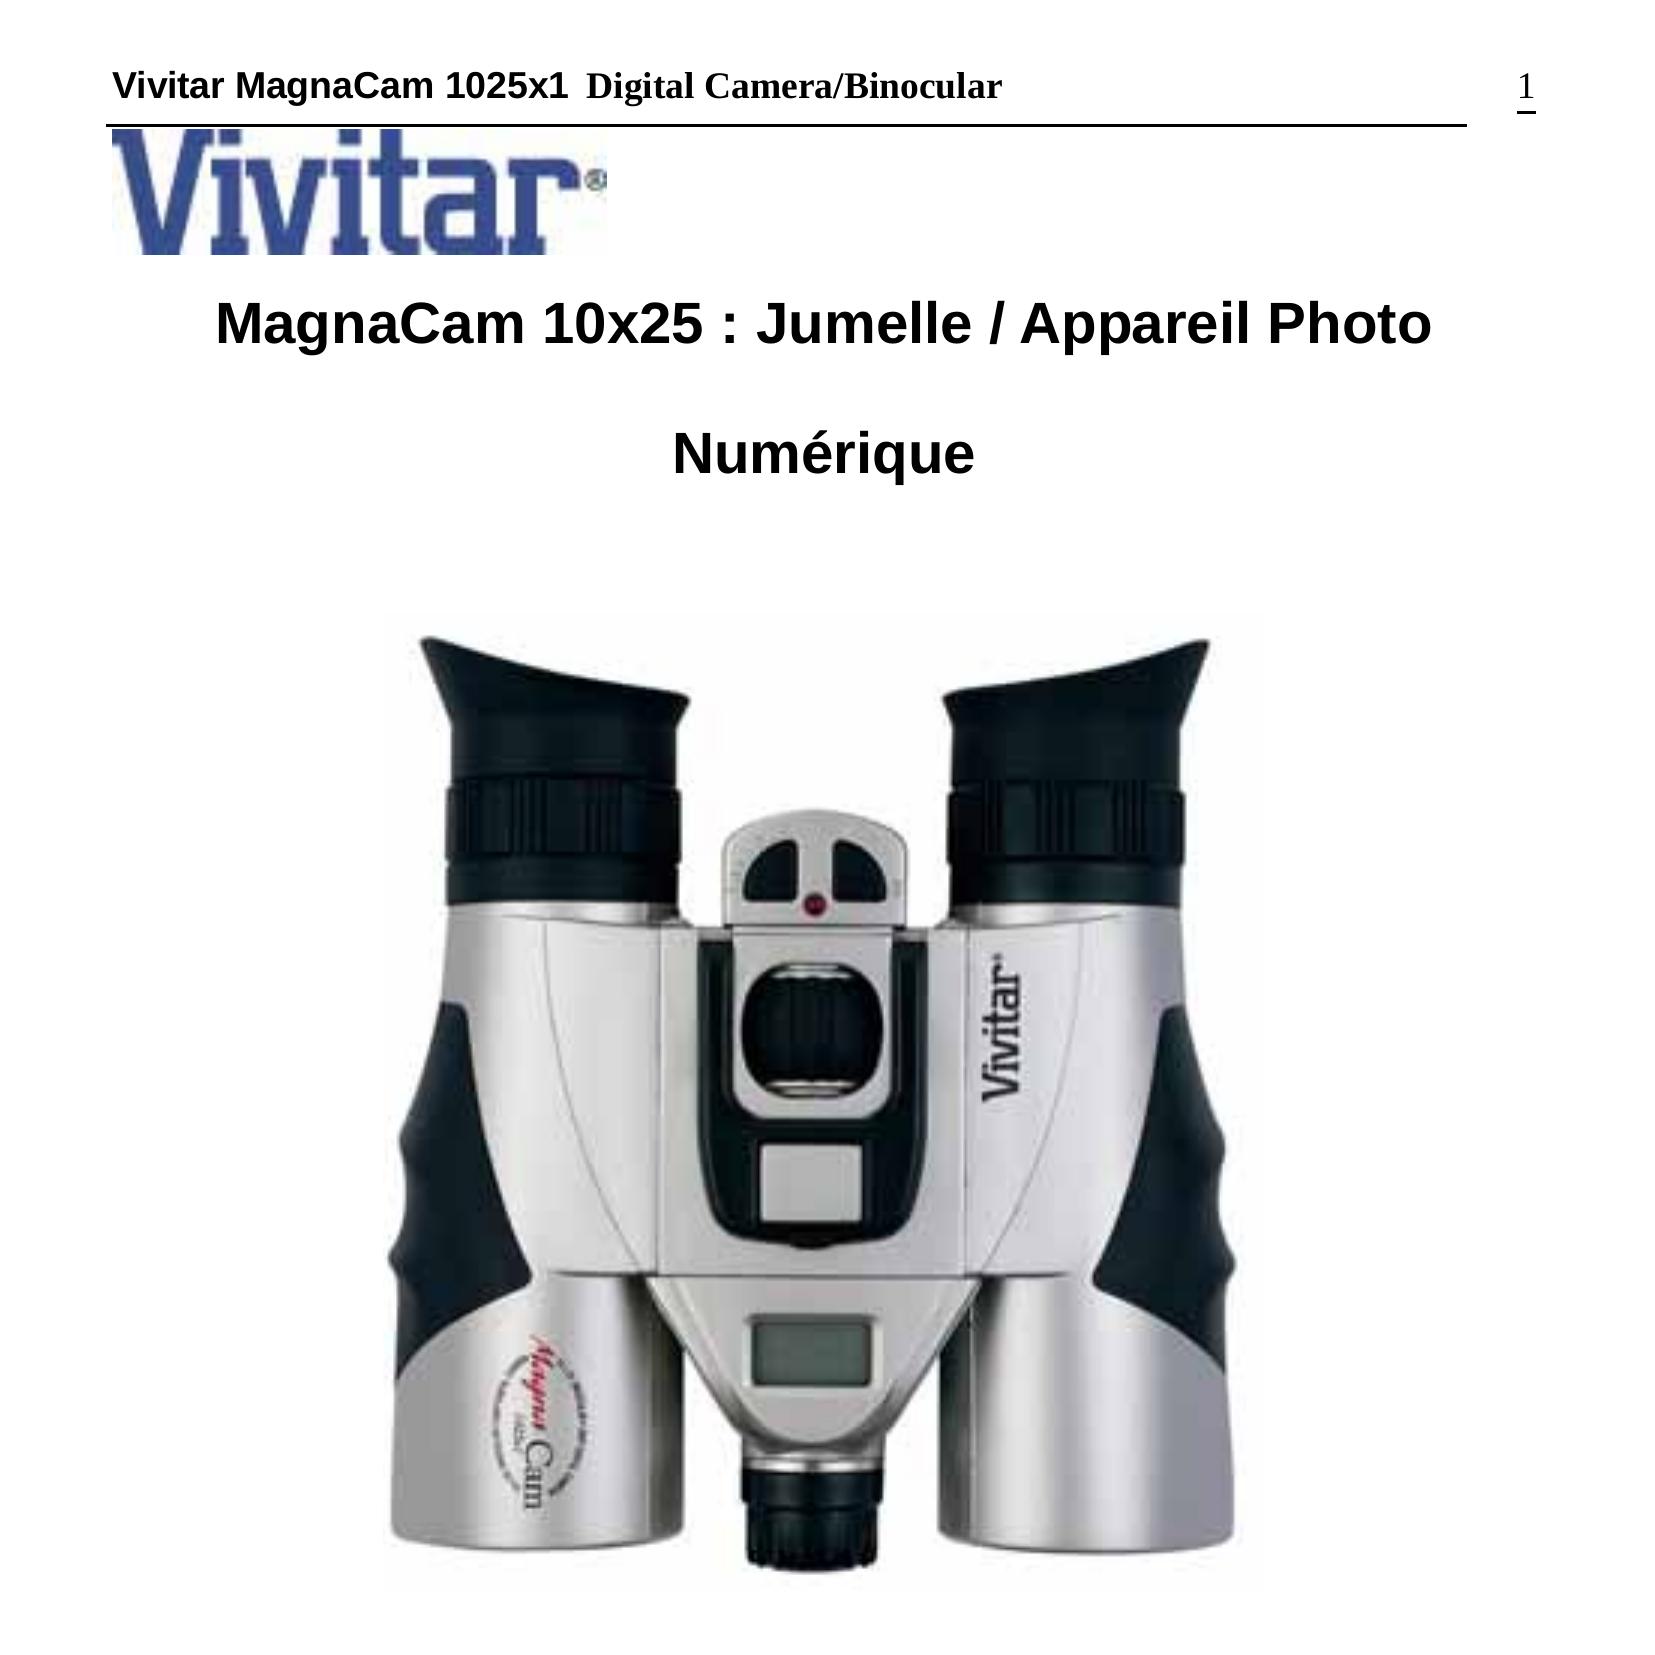 Vivitar MagnaCam 1025x1 Digital Camera/Binocular Camera Accessories User Manual